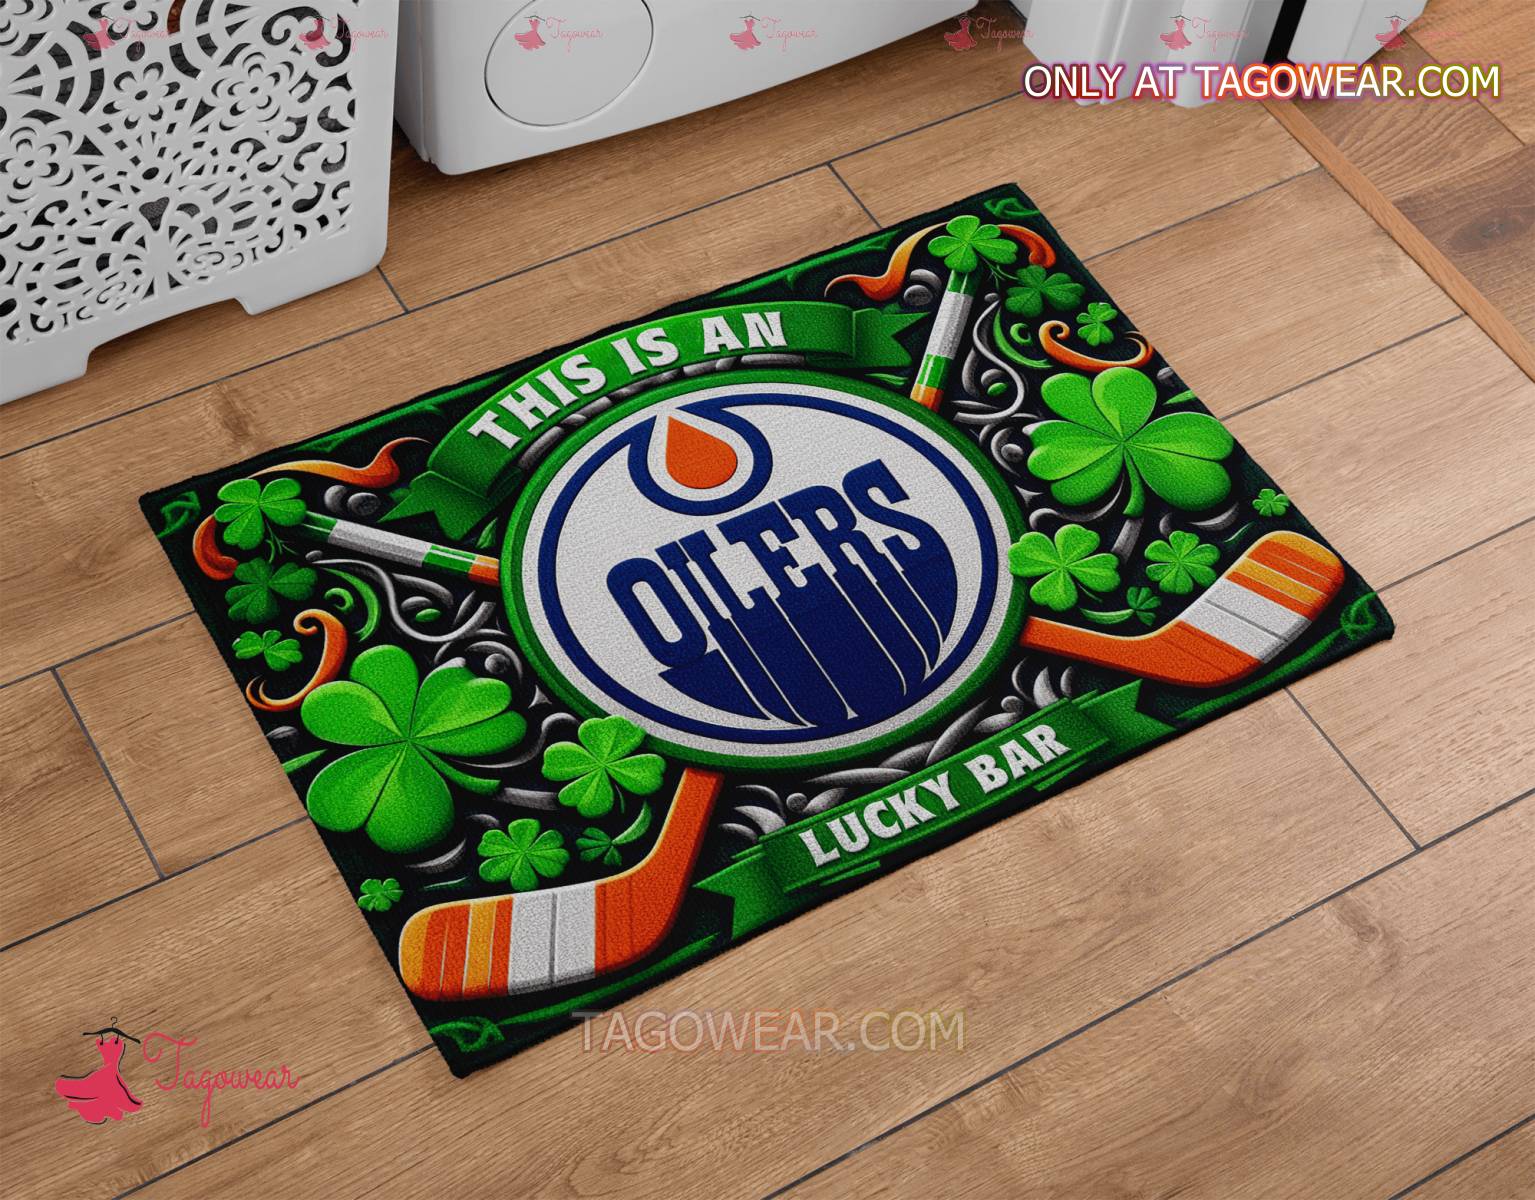 Edmonton Oilers This Is An Lucky Bar Doormat a